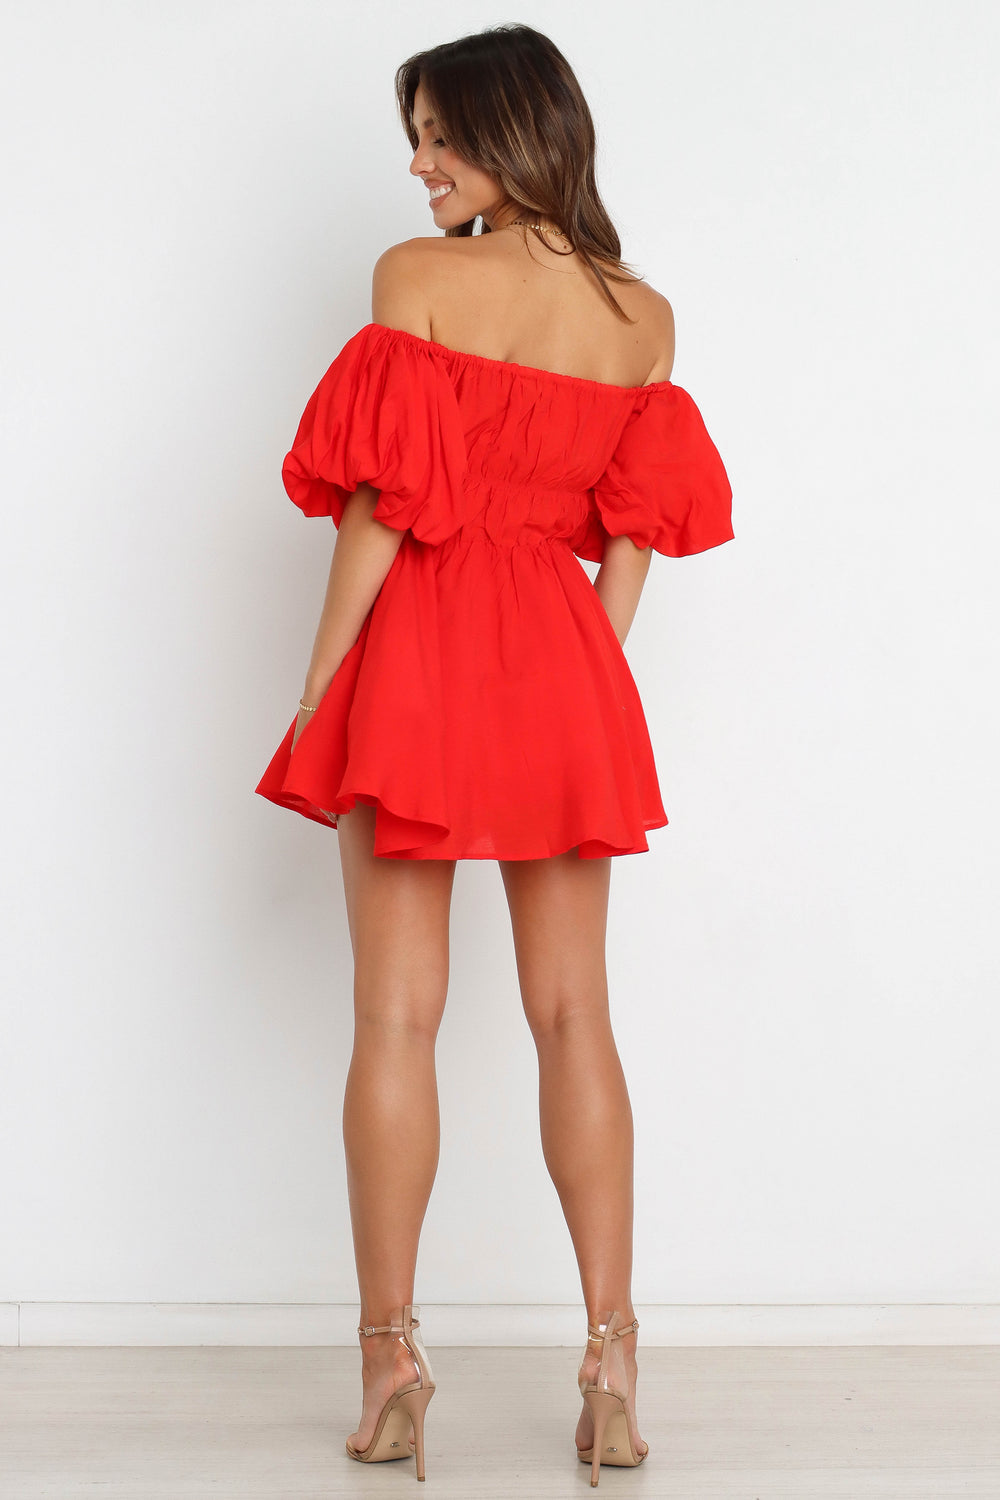 Petal and Pup USA DRESSES Ariana Dress - Red